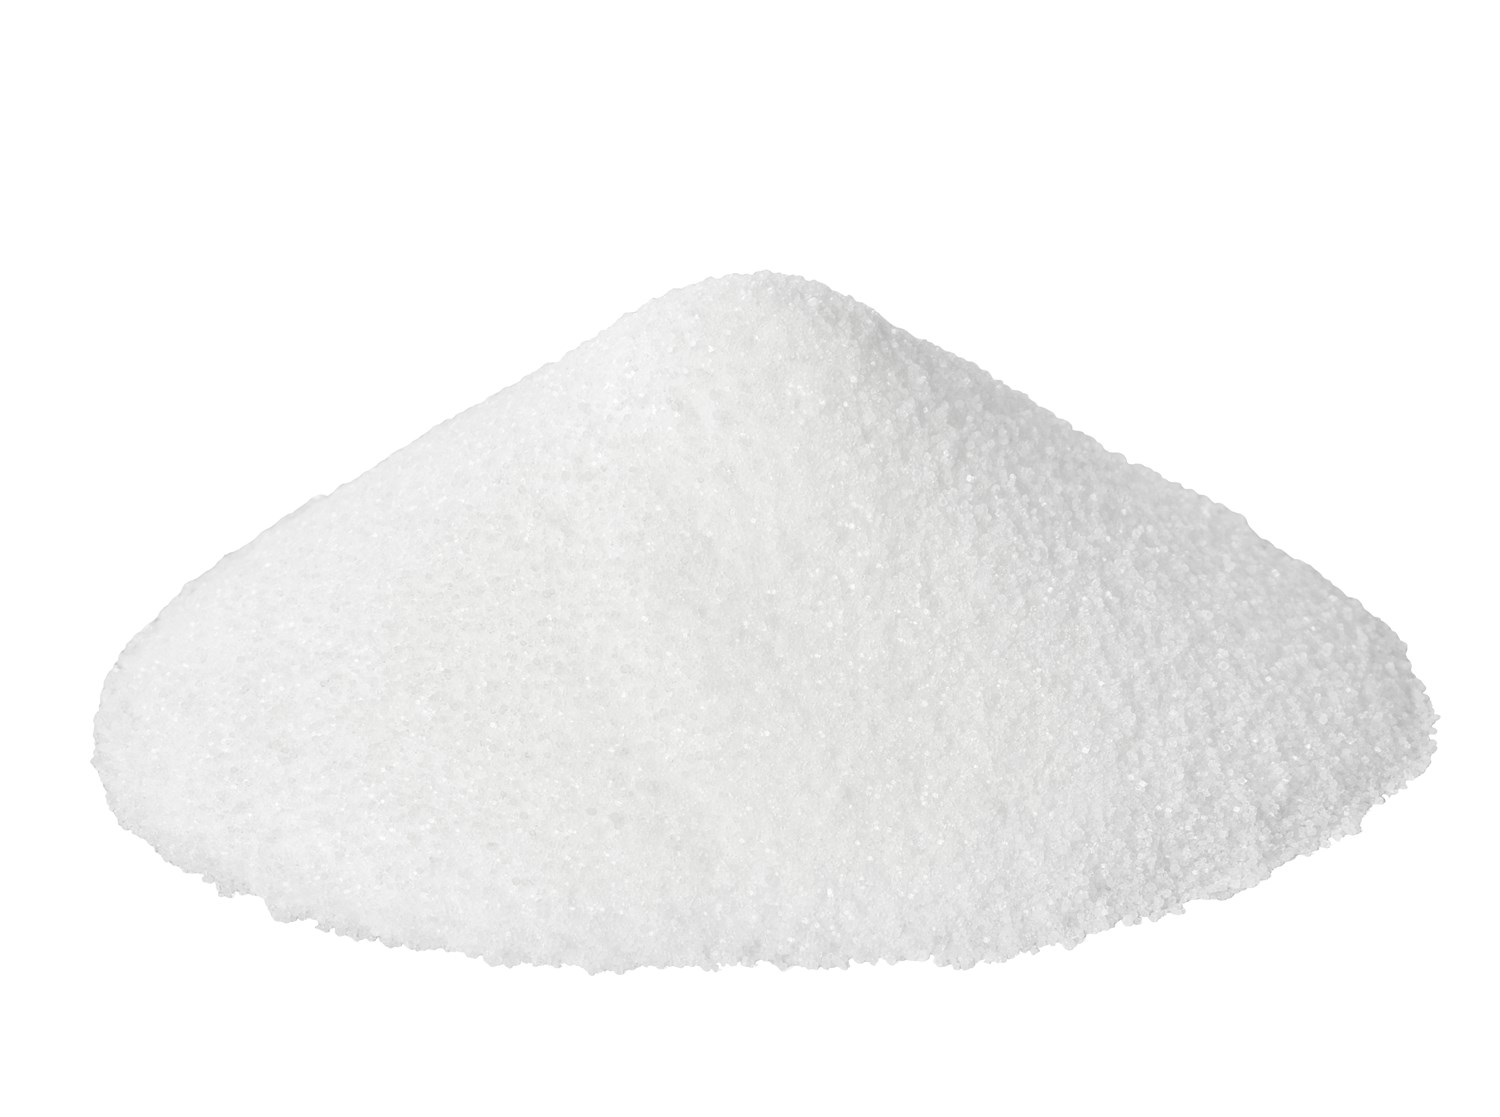 Tripolyphosphate de sodium